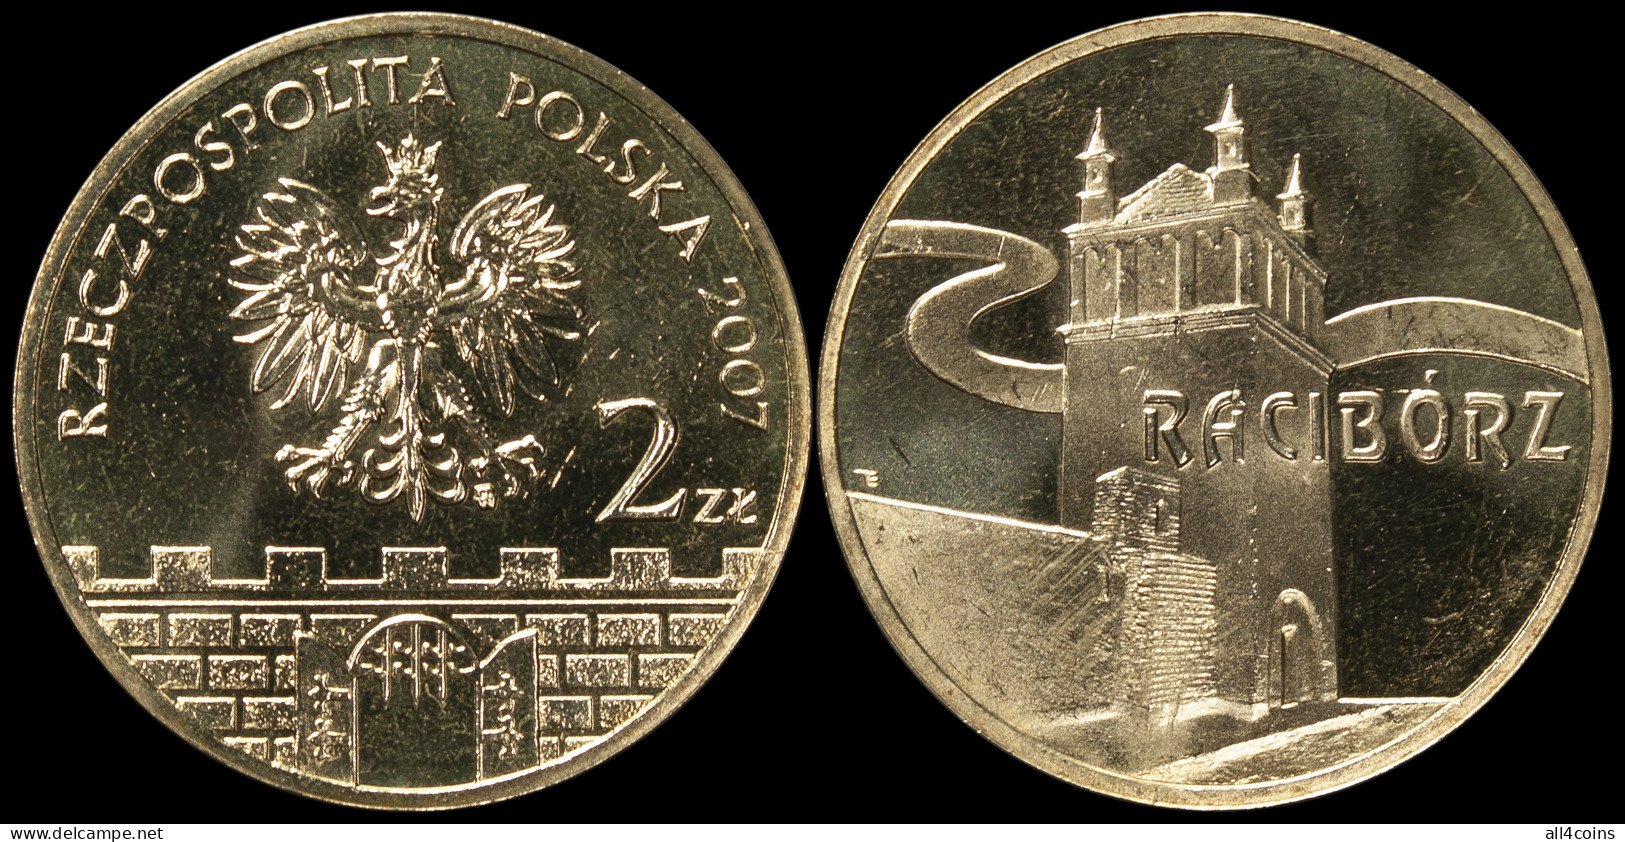 Poland. 2 Zloty. 2007 (Coin KM#Y.619. Unc) Historical City Raciborz - Poland